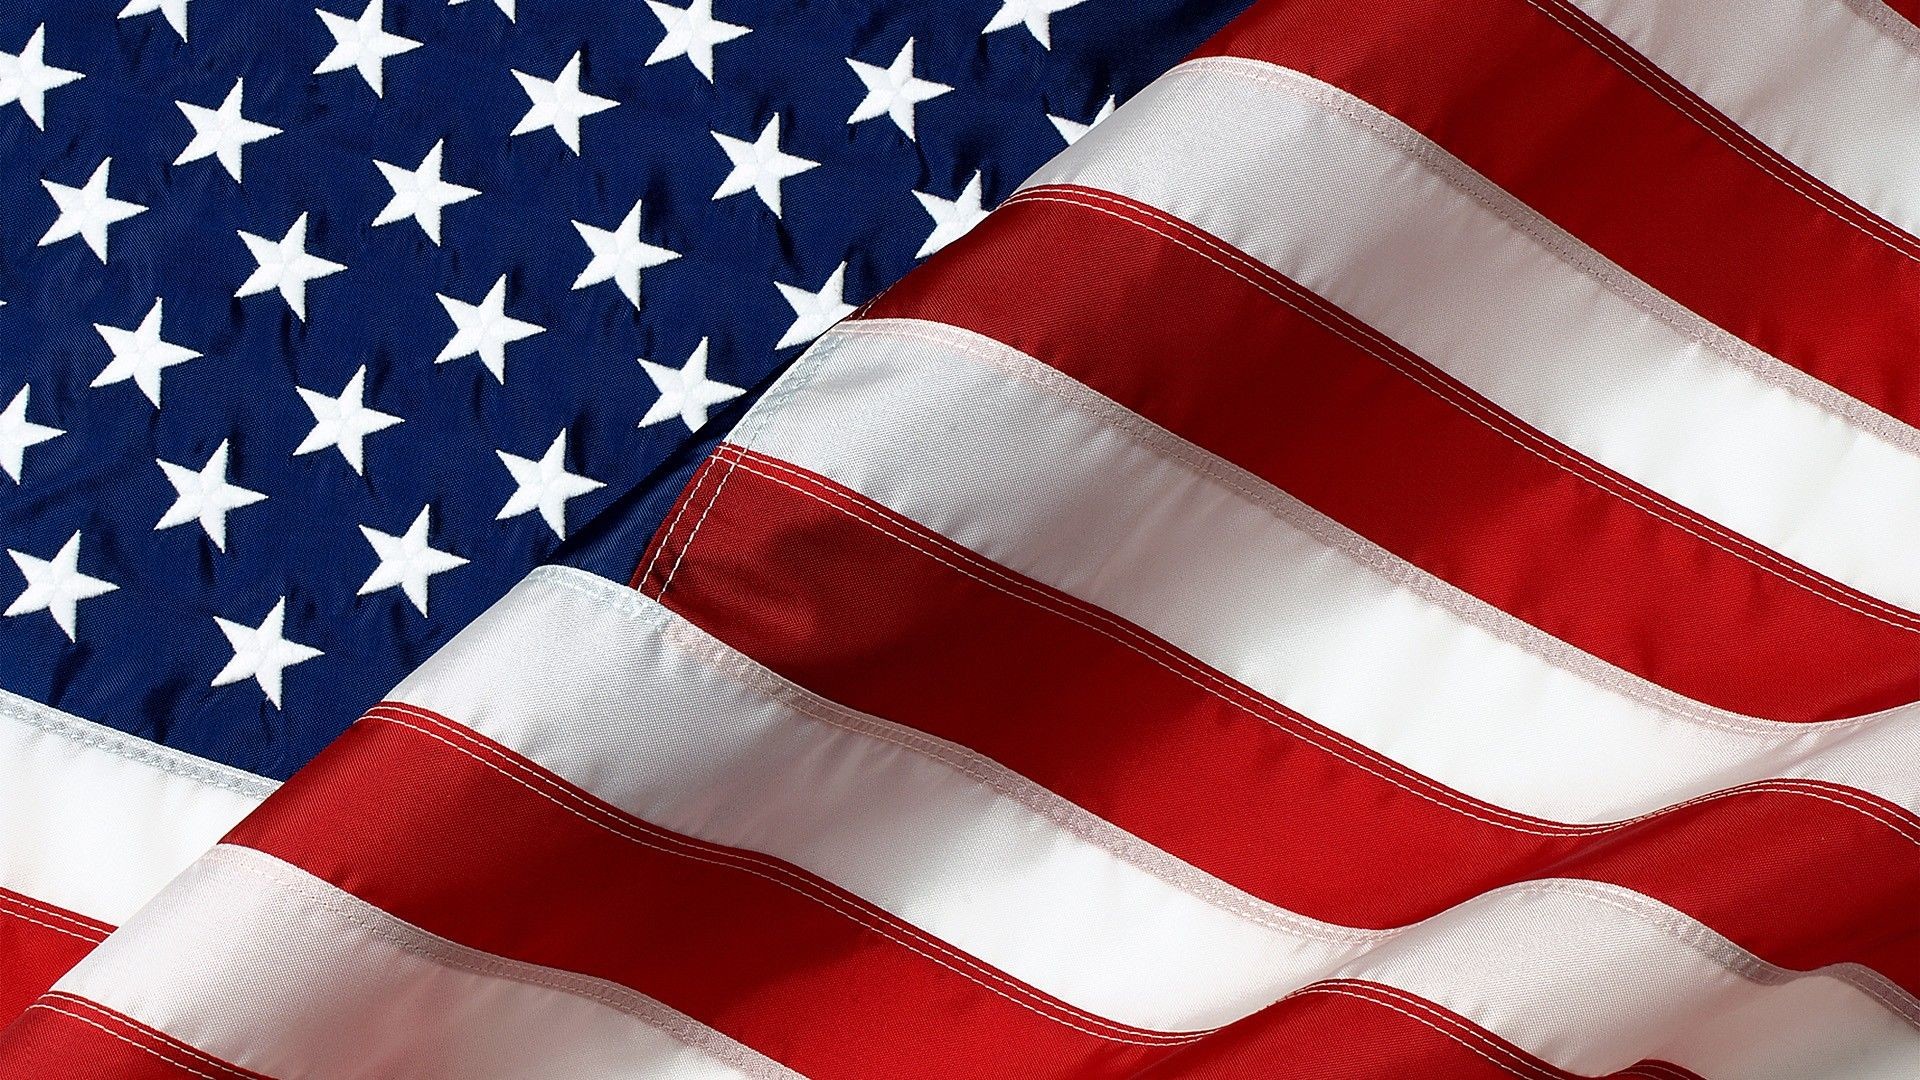 best ideas about American flag wallpaper on Pinterest